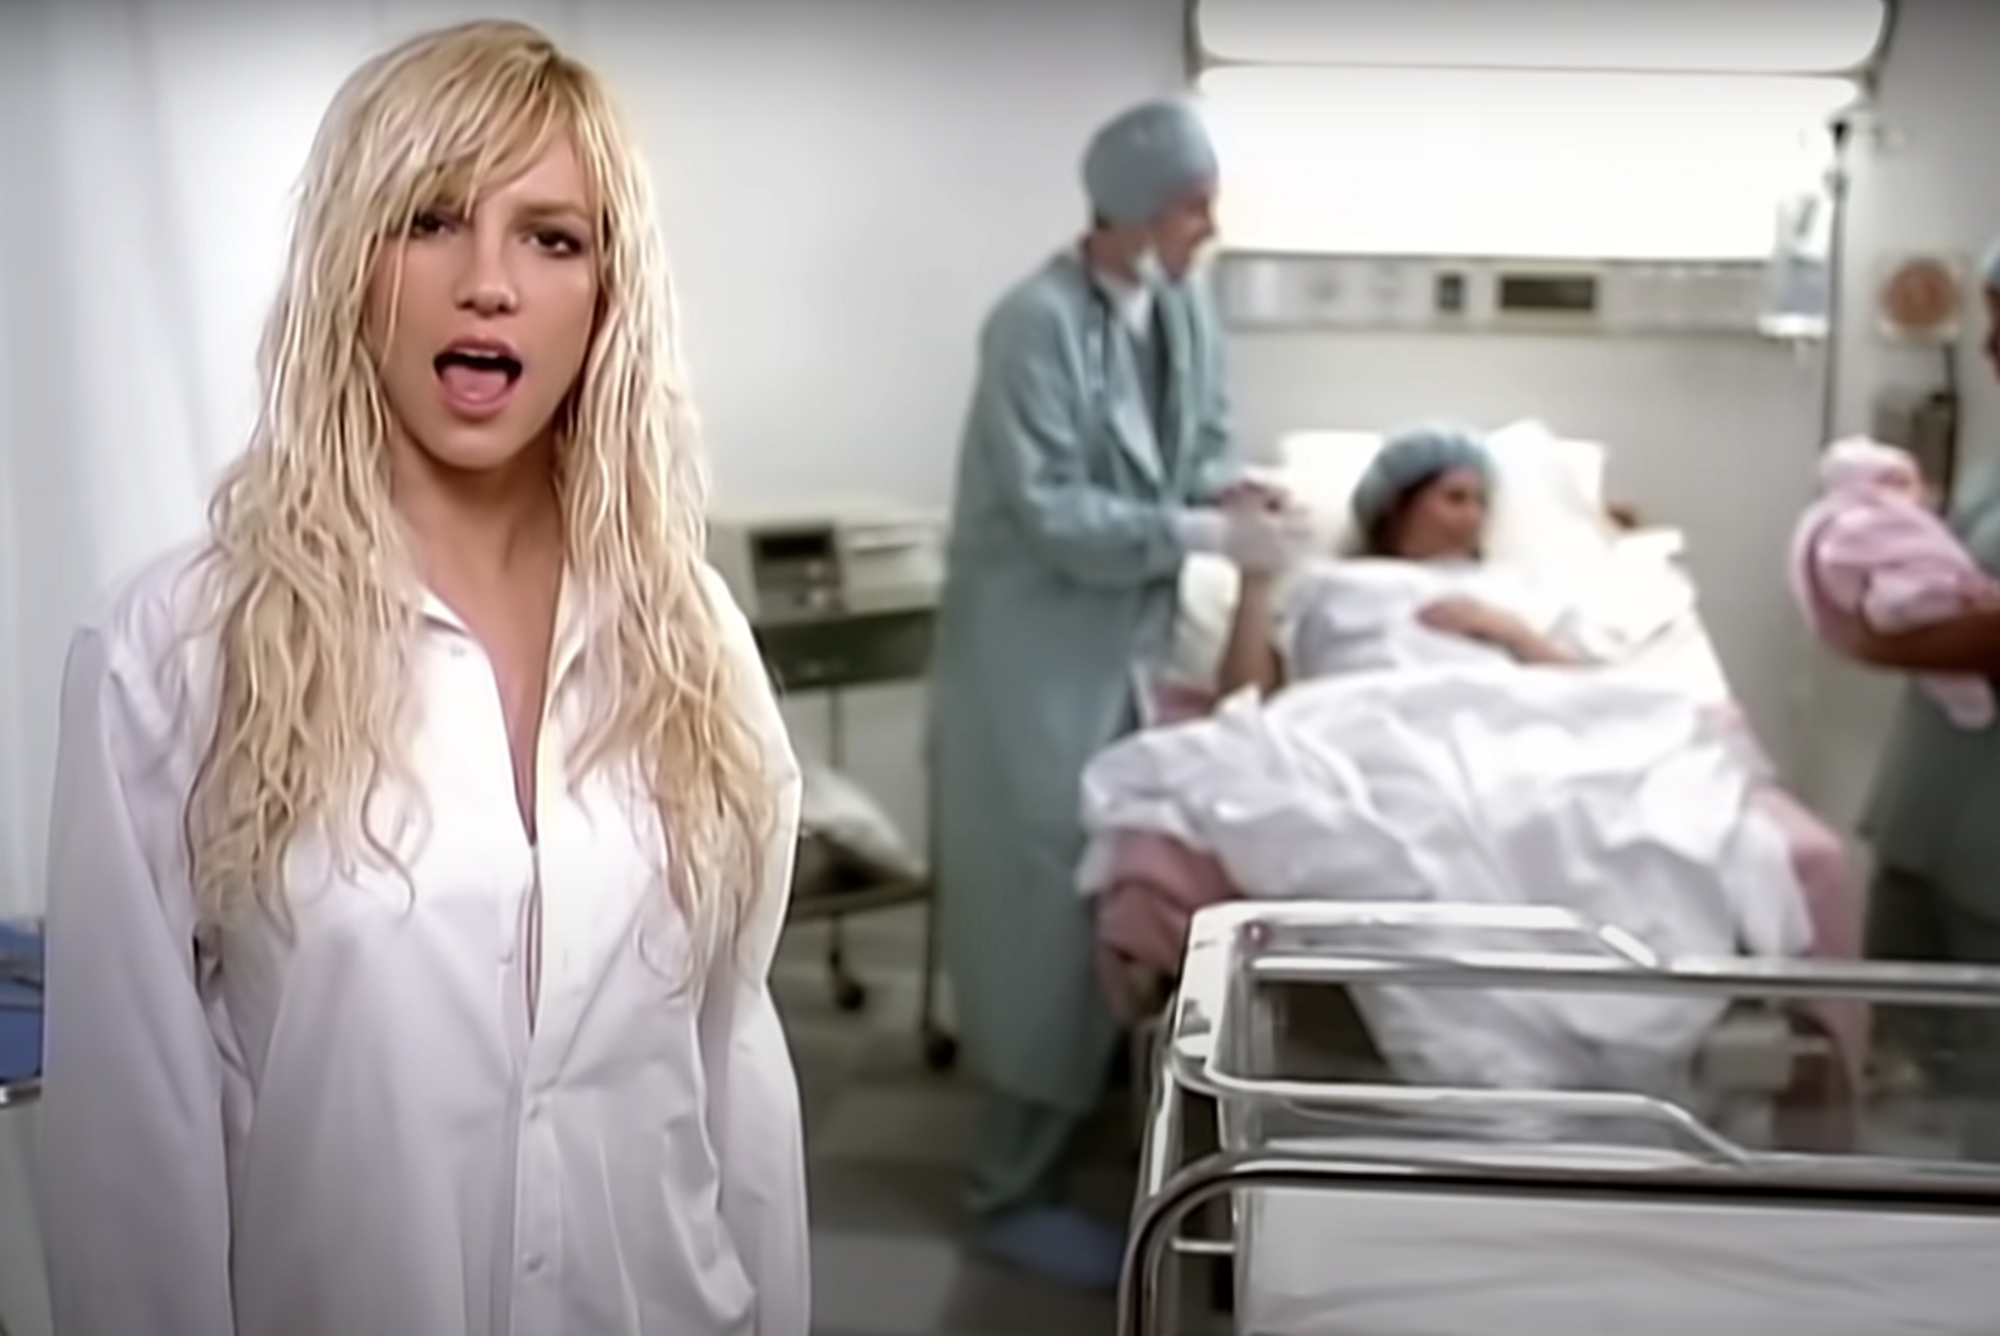 Фанаты Бритни Спирс нашли намек на аборт от Джастина Тимберлейка в песне Everytime. Видео